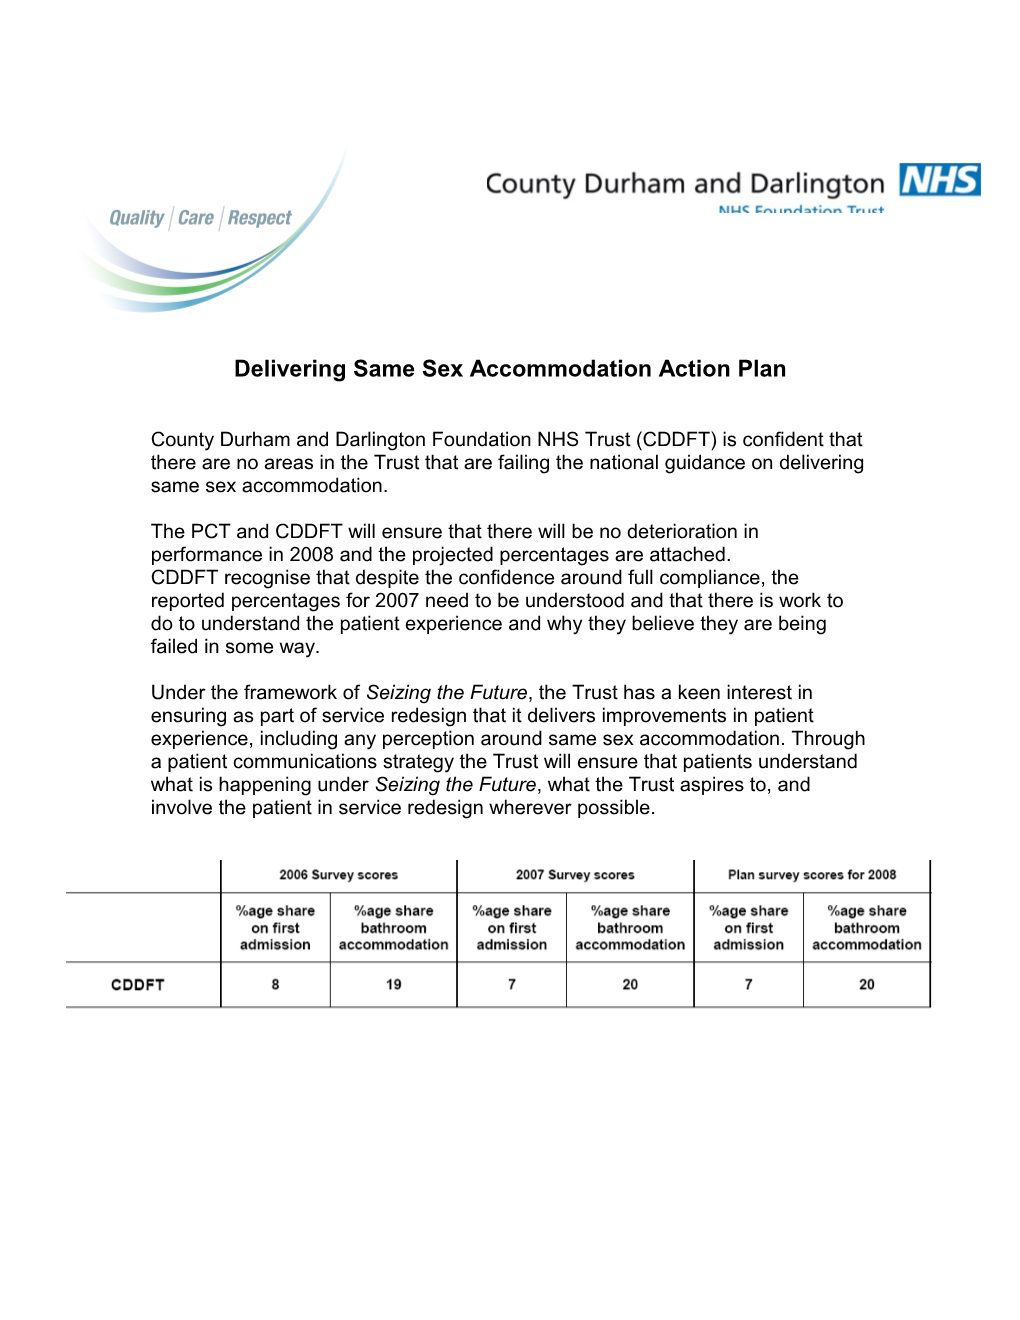 County Durham and Darlington Foundation NHS Trust (CDDFT)